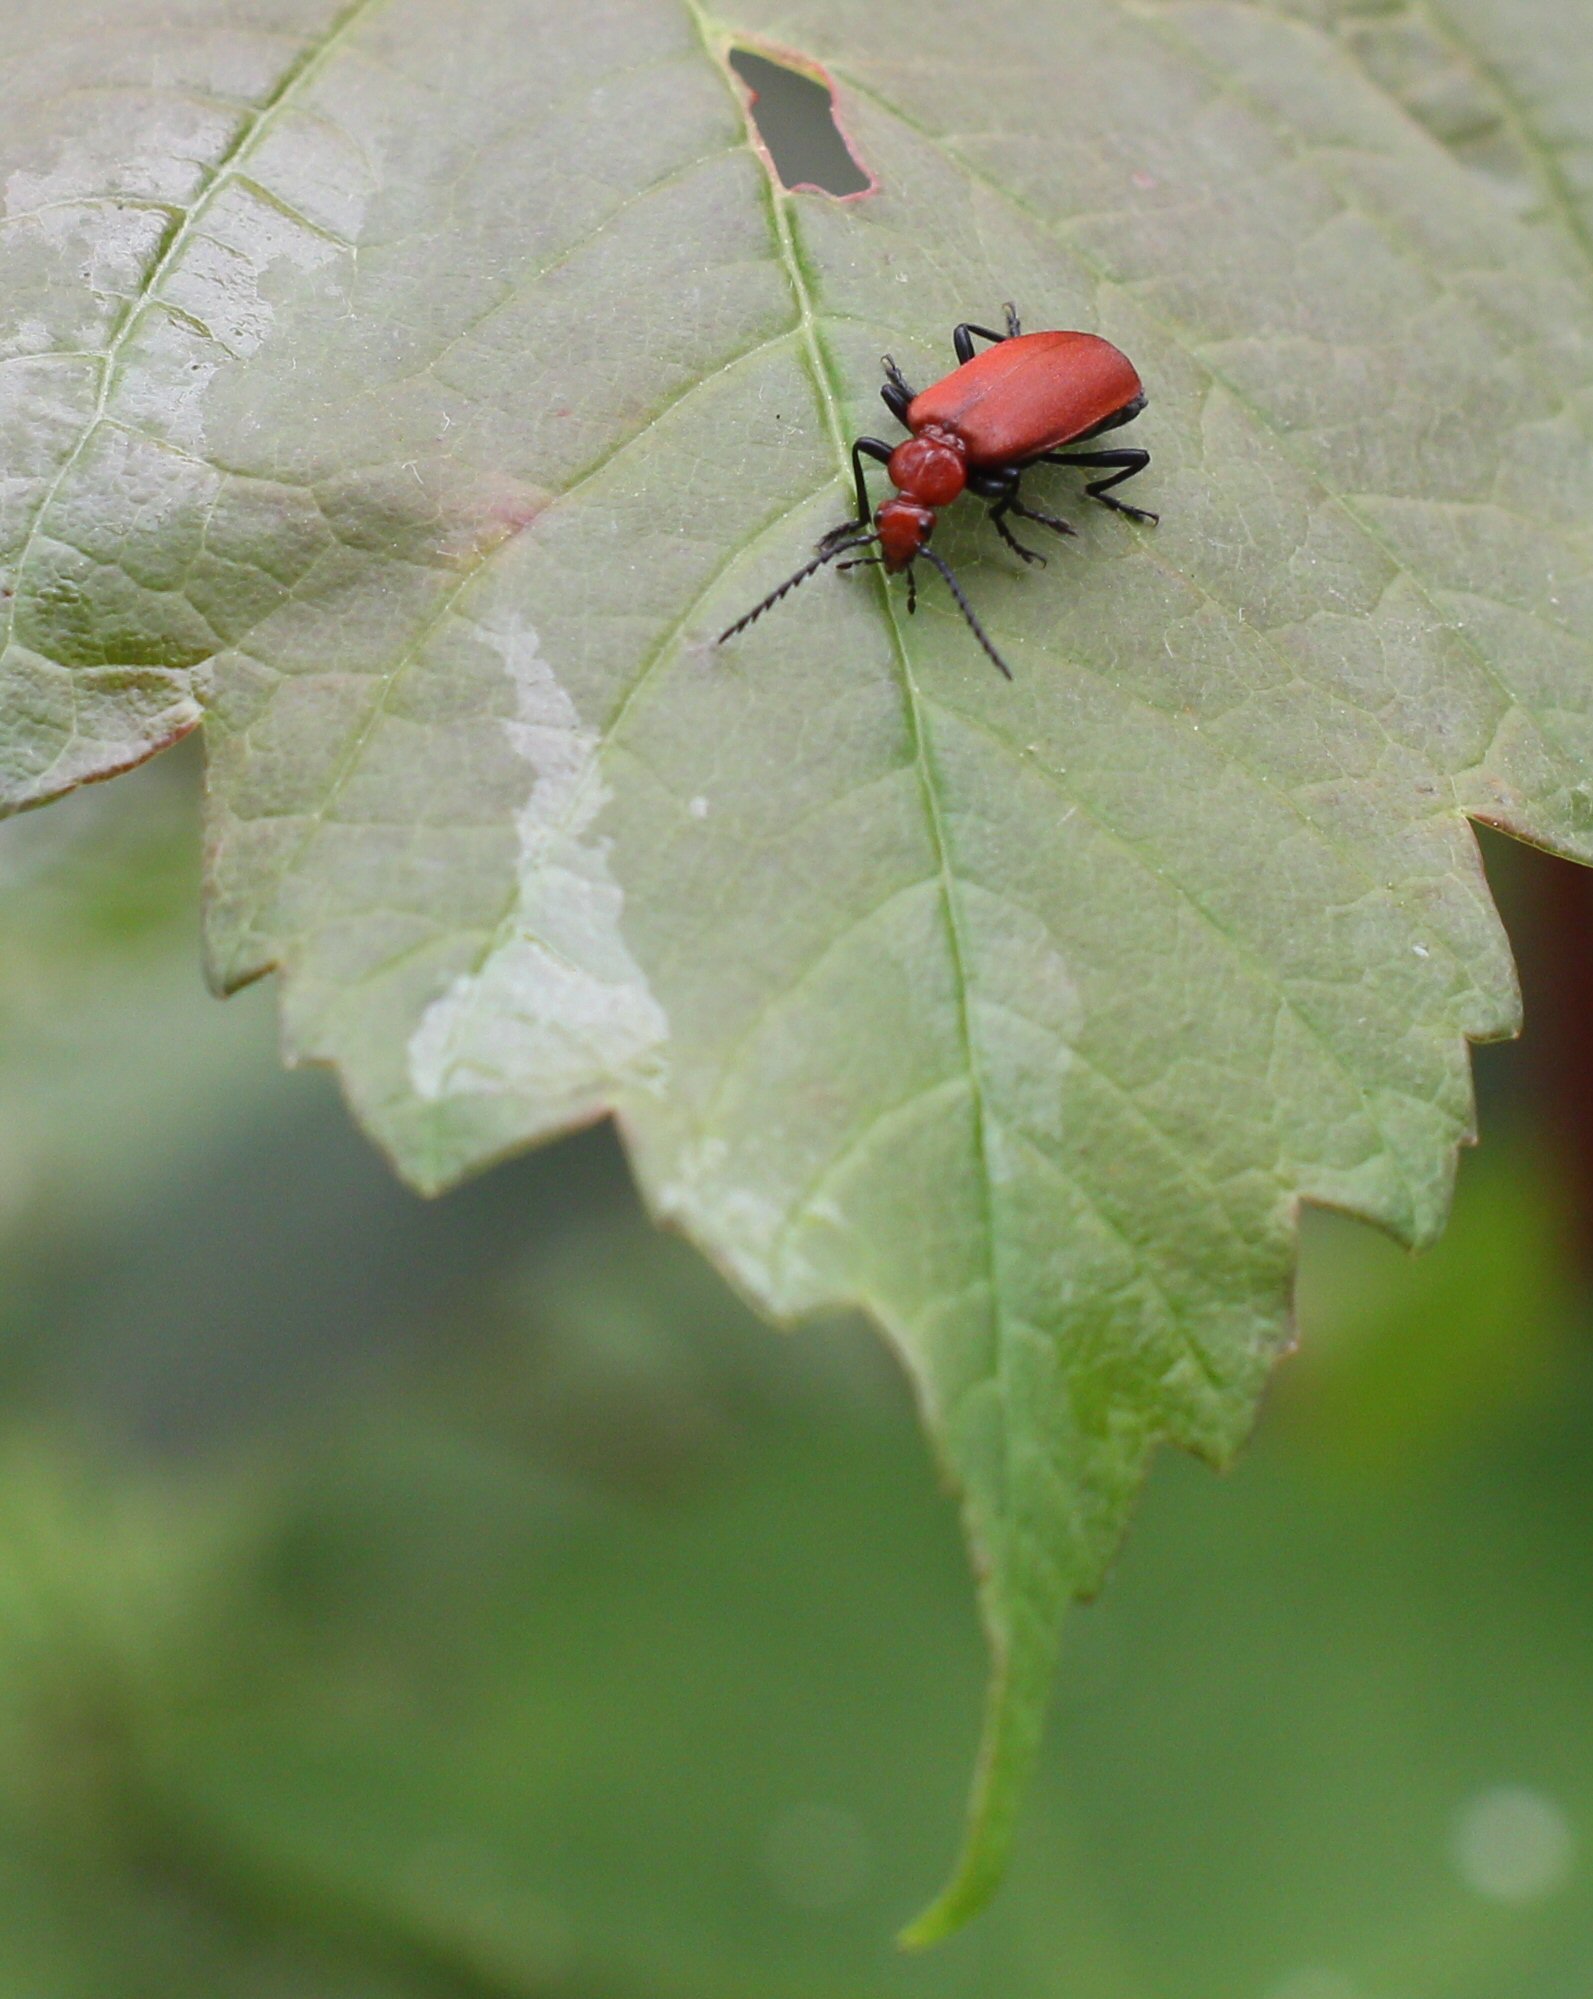 a small red bug sitting on a green leaf